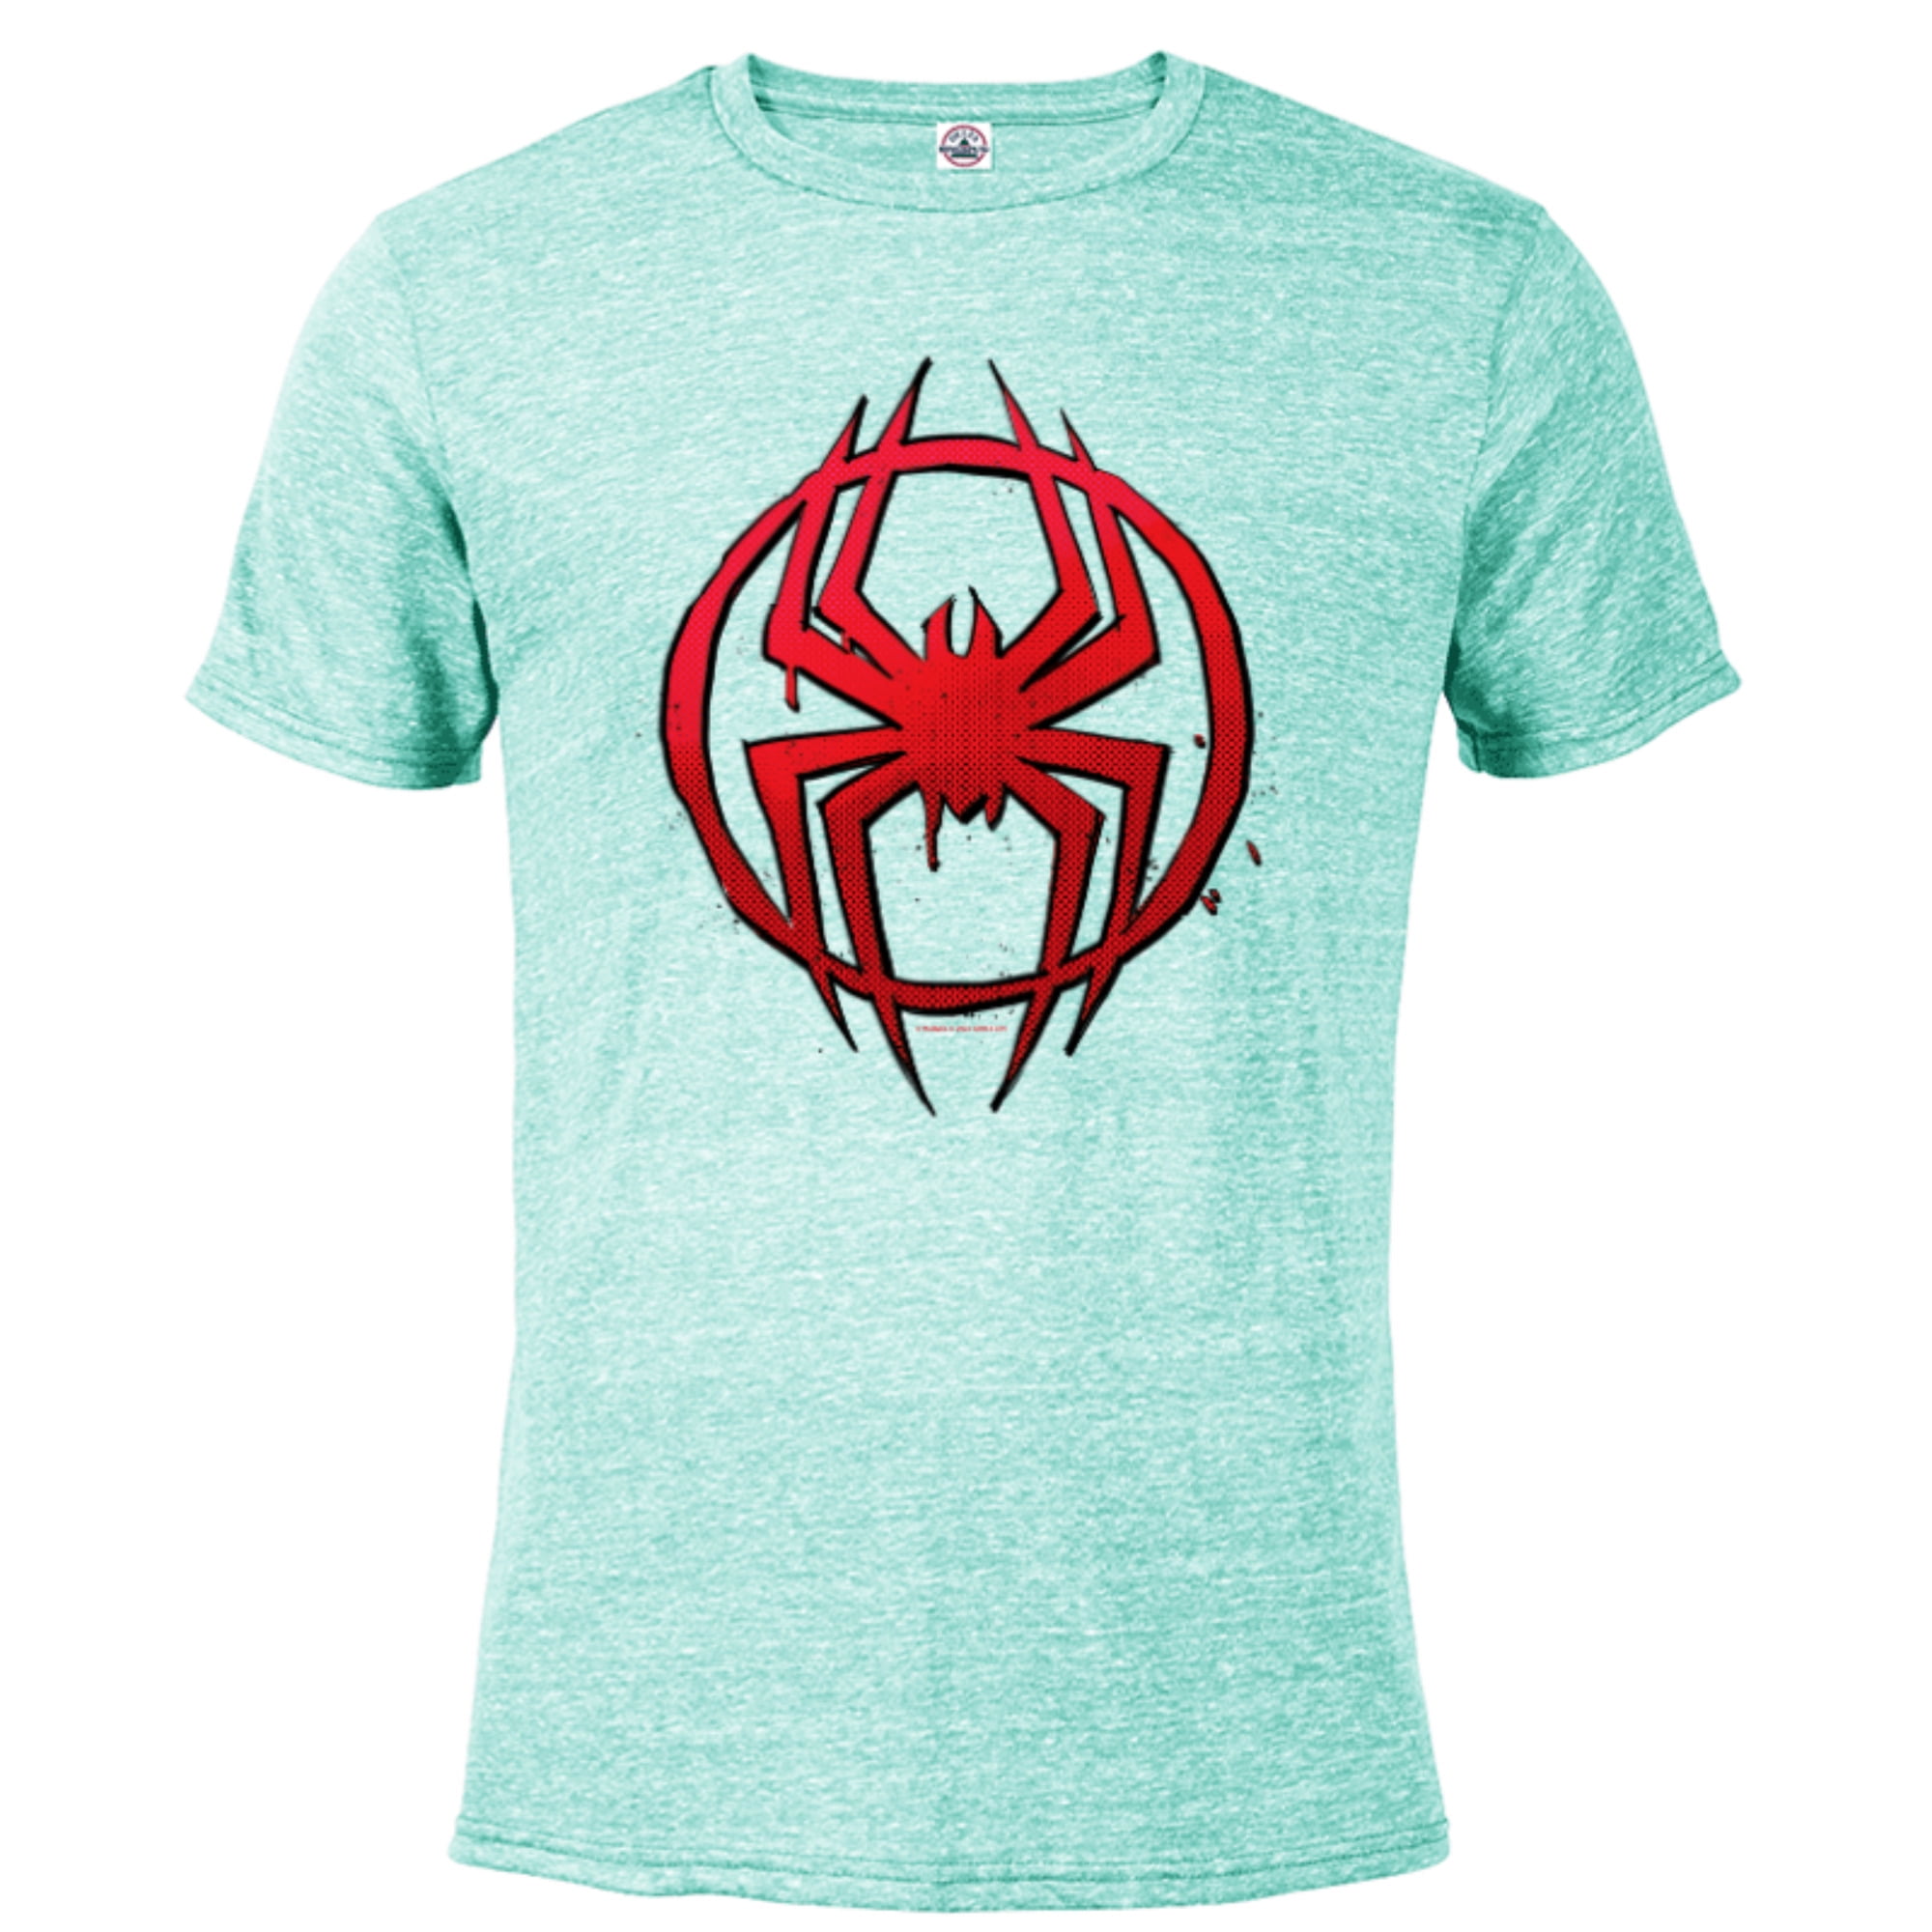 Marvel Amazing Spider-man Adult Size L Sleeve T-shirt Blue Graphic Short